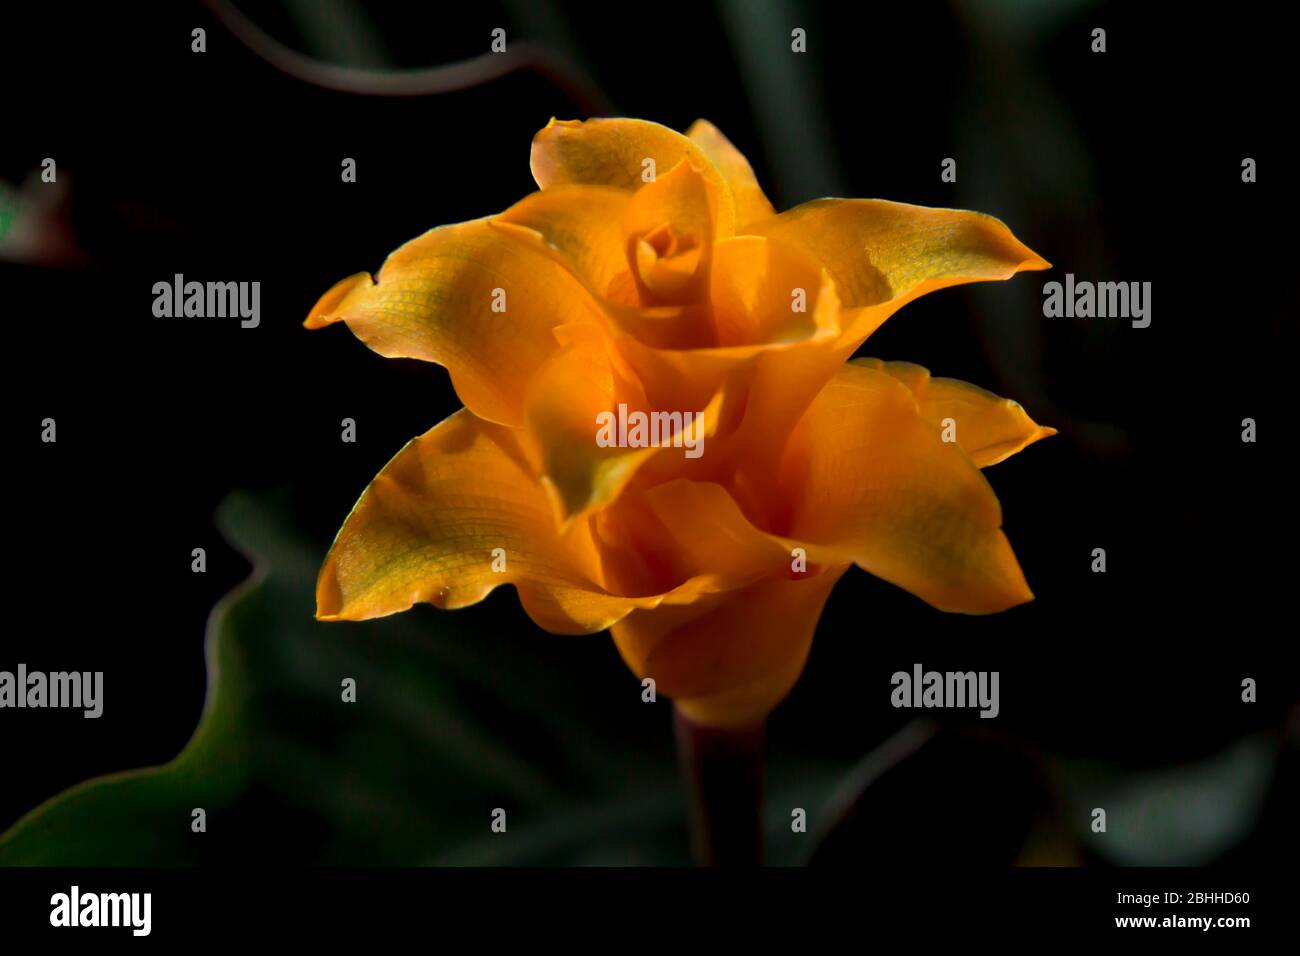 orange flower close up Stock Photo